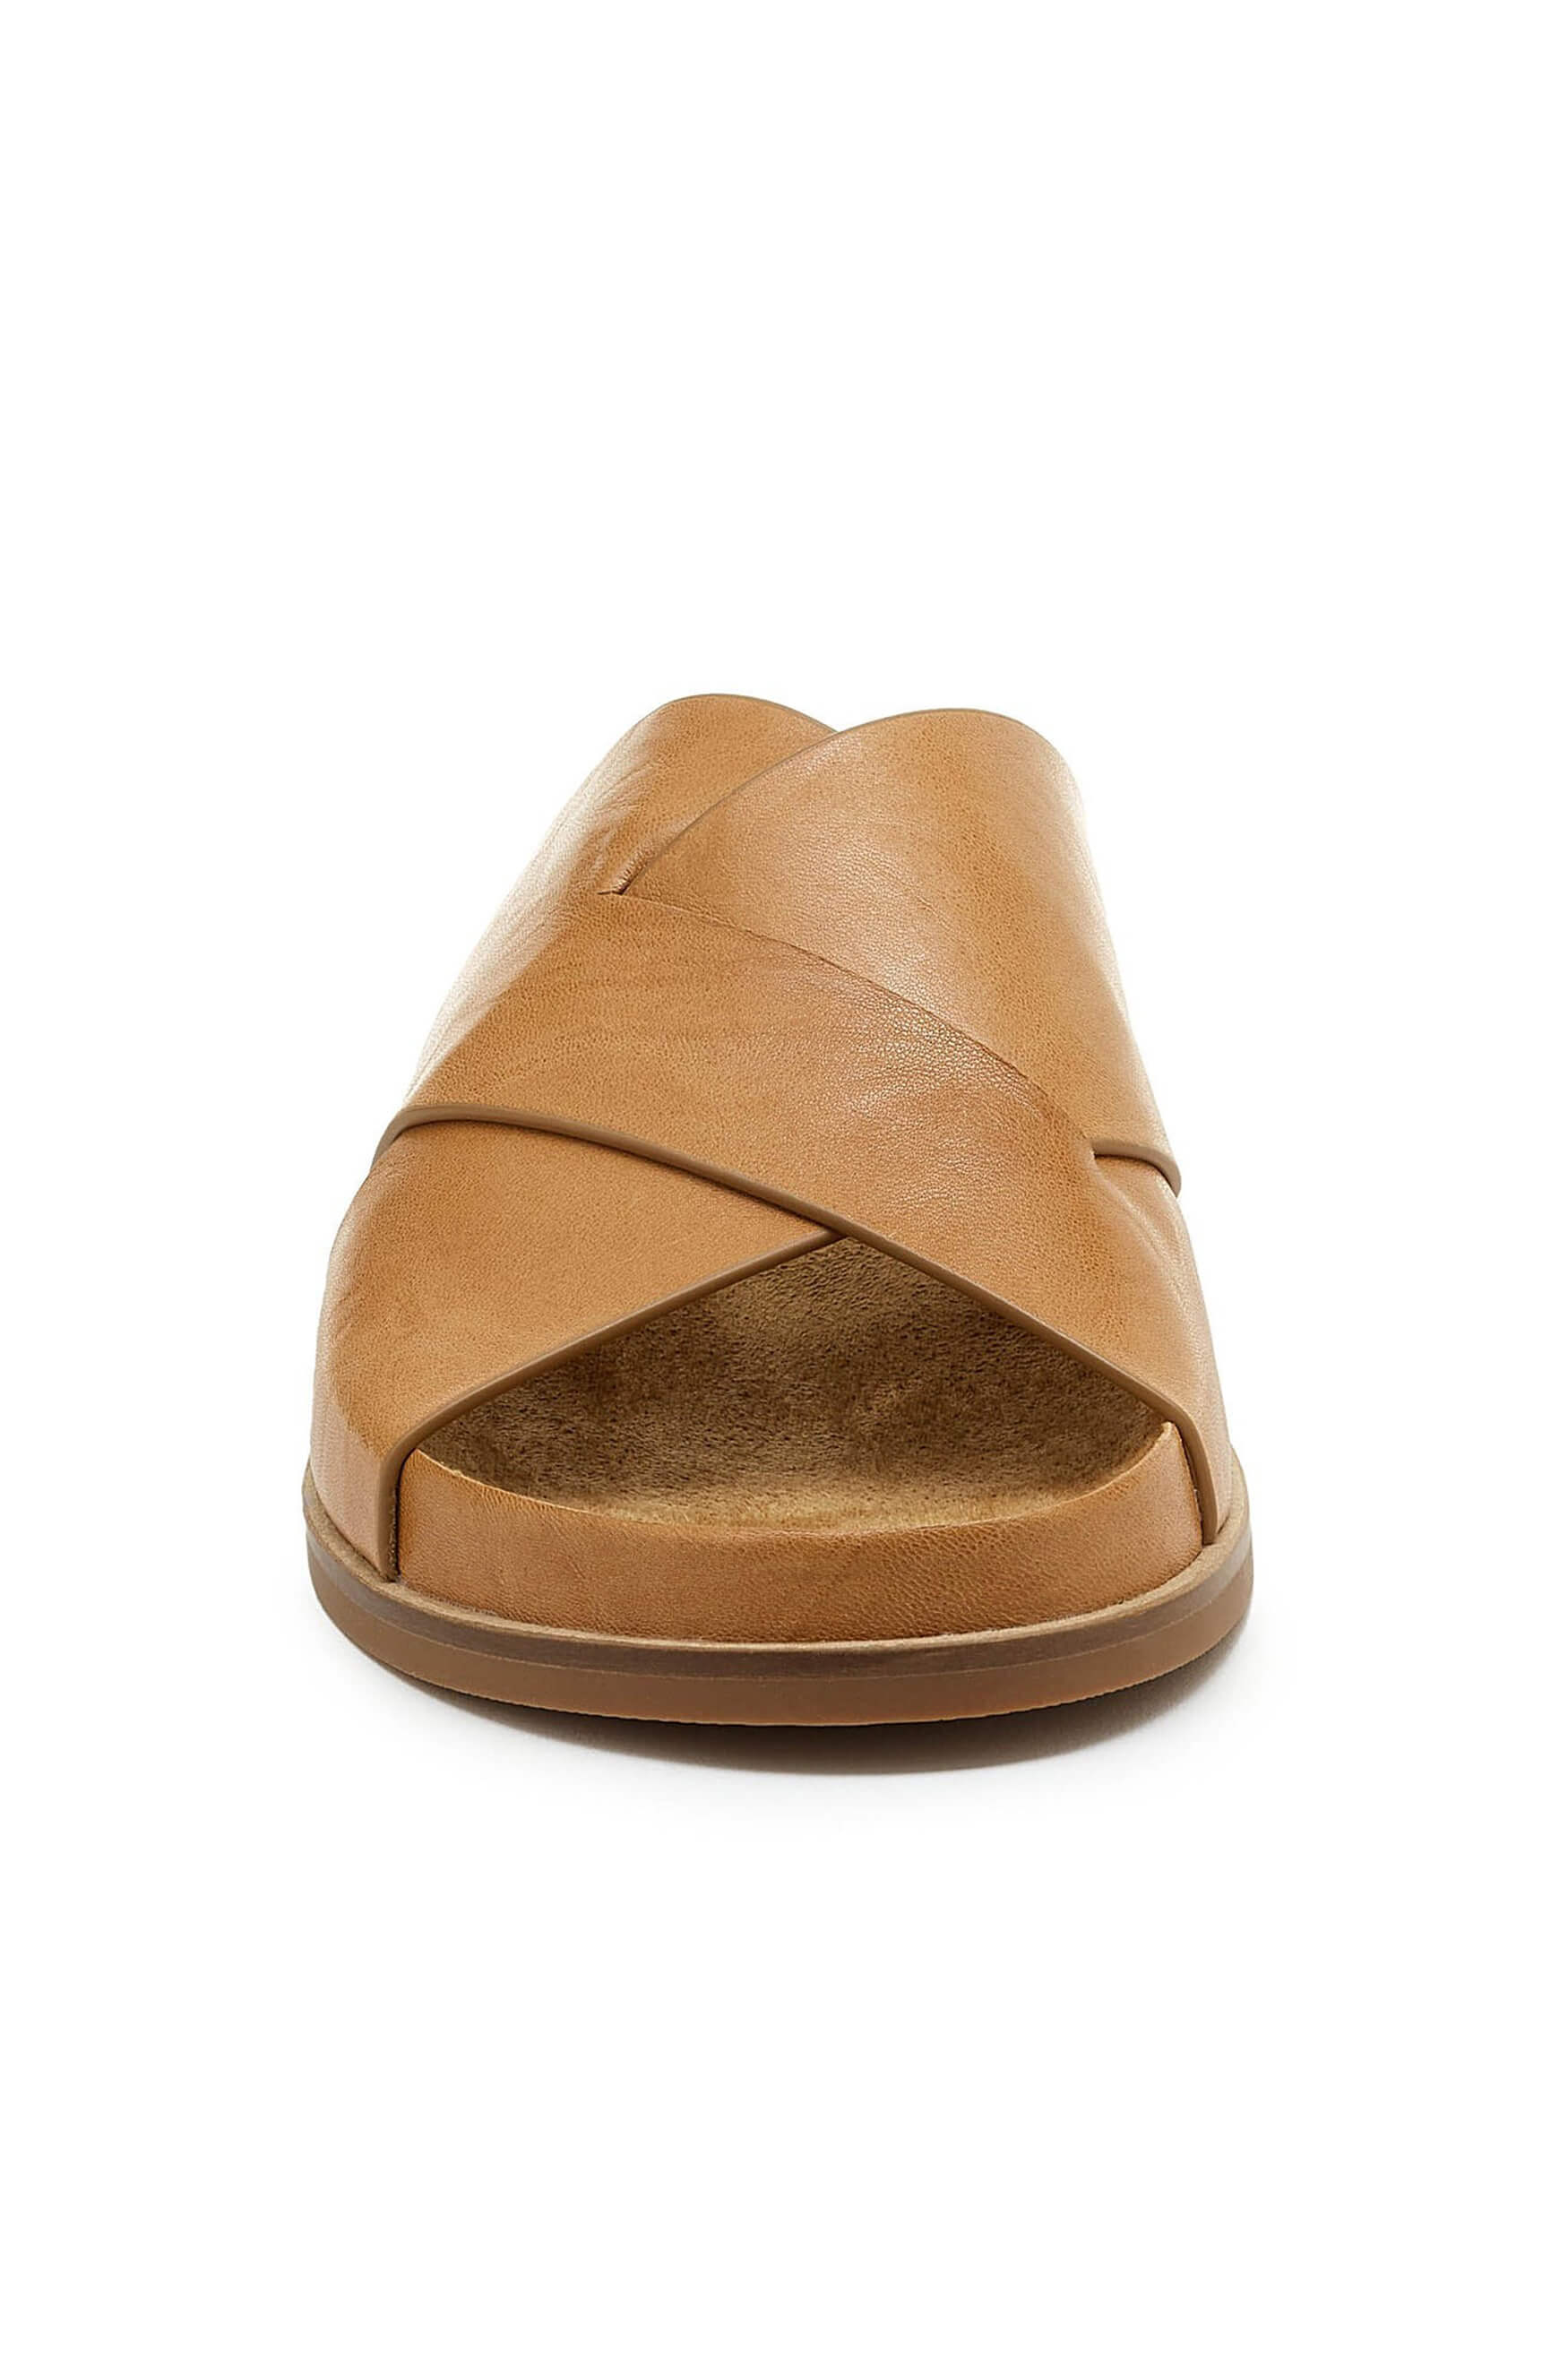 Kelsi Dagger Broojlyn Sailor slide sandal in tan